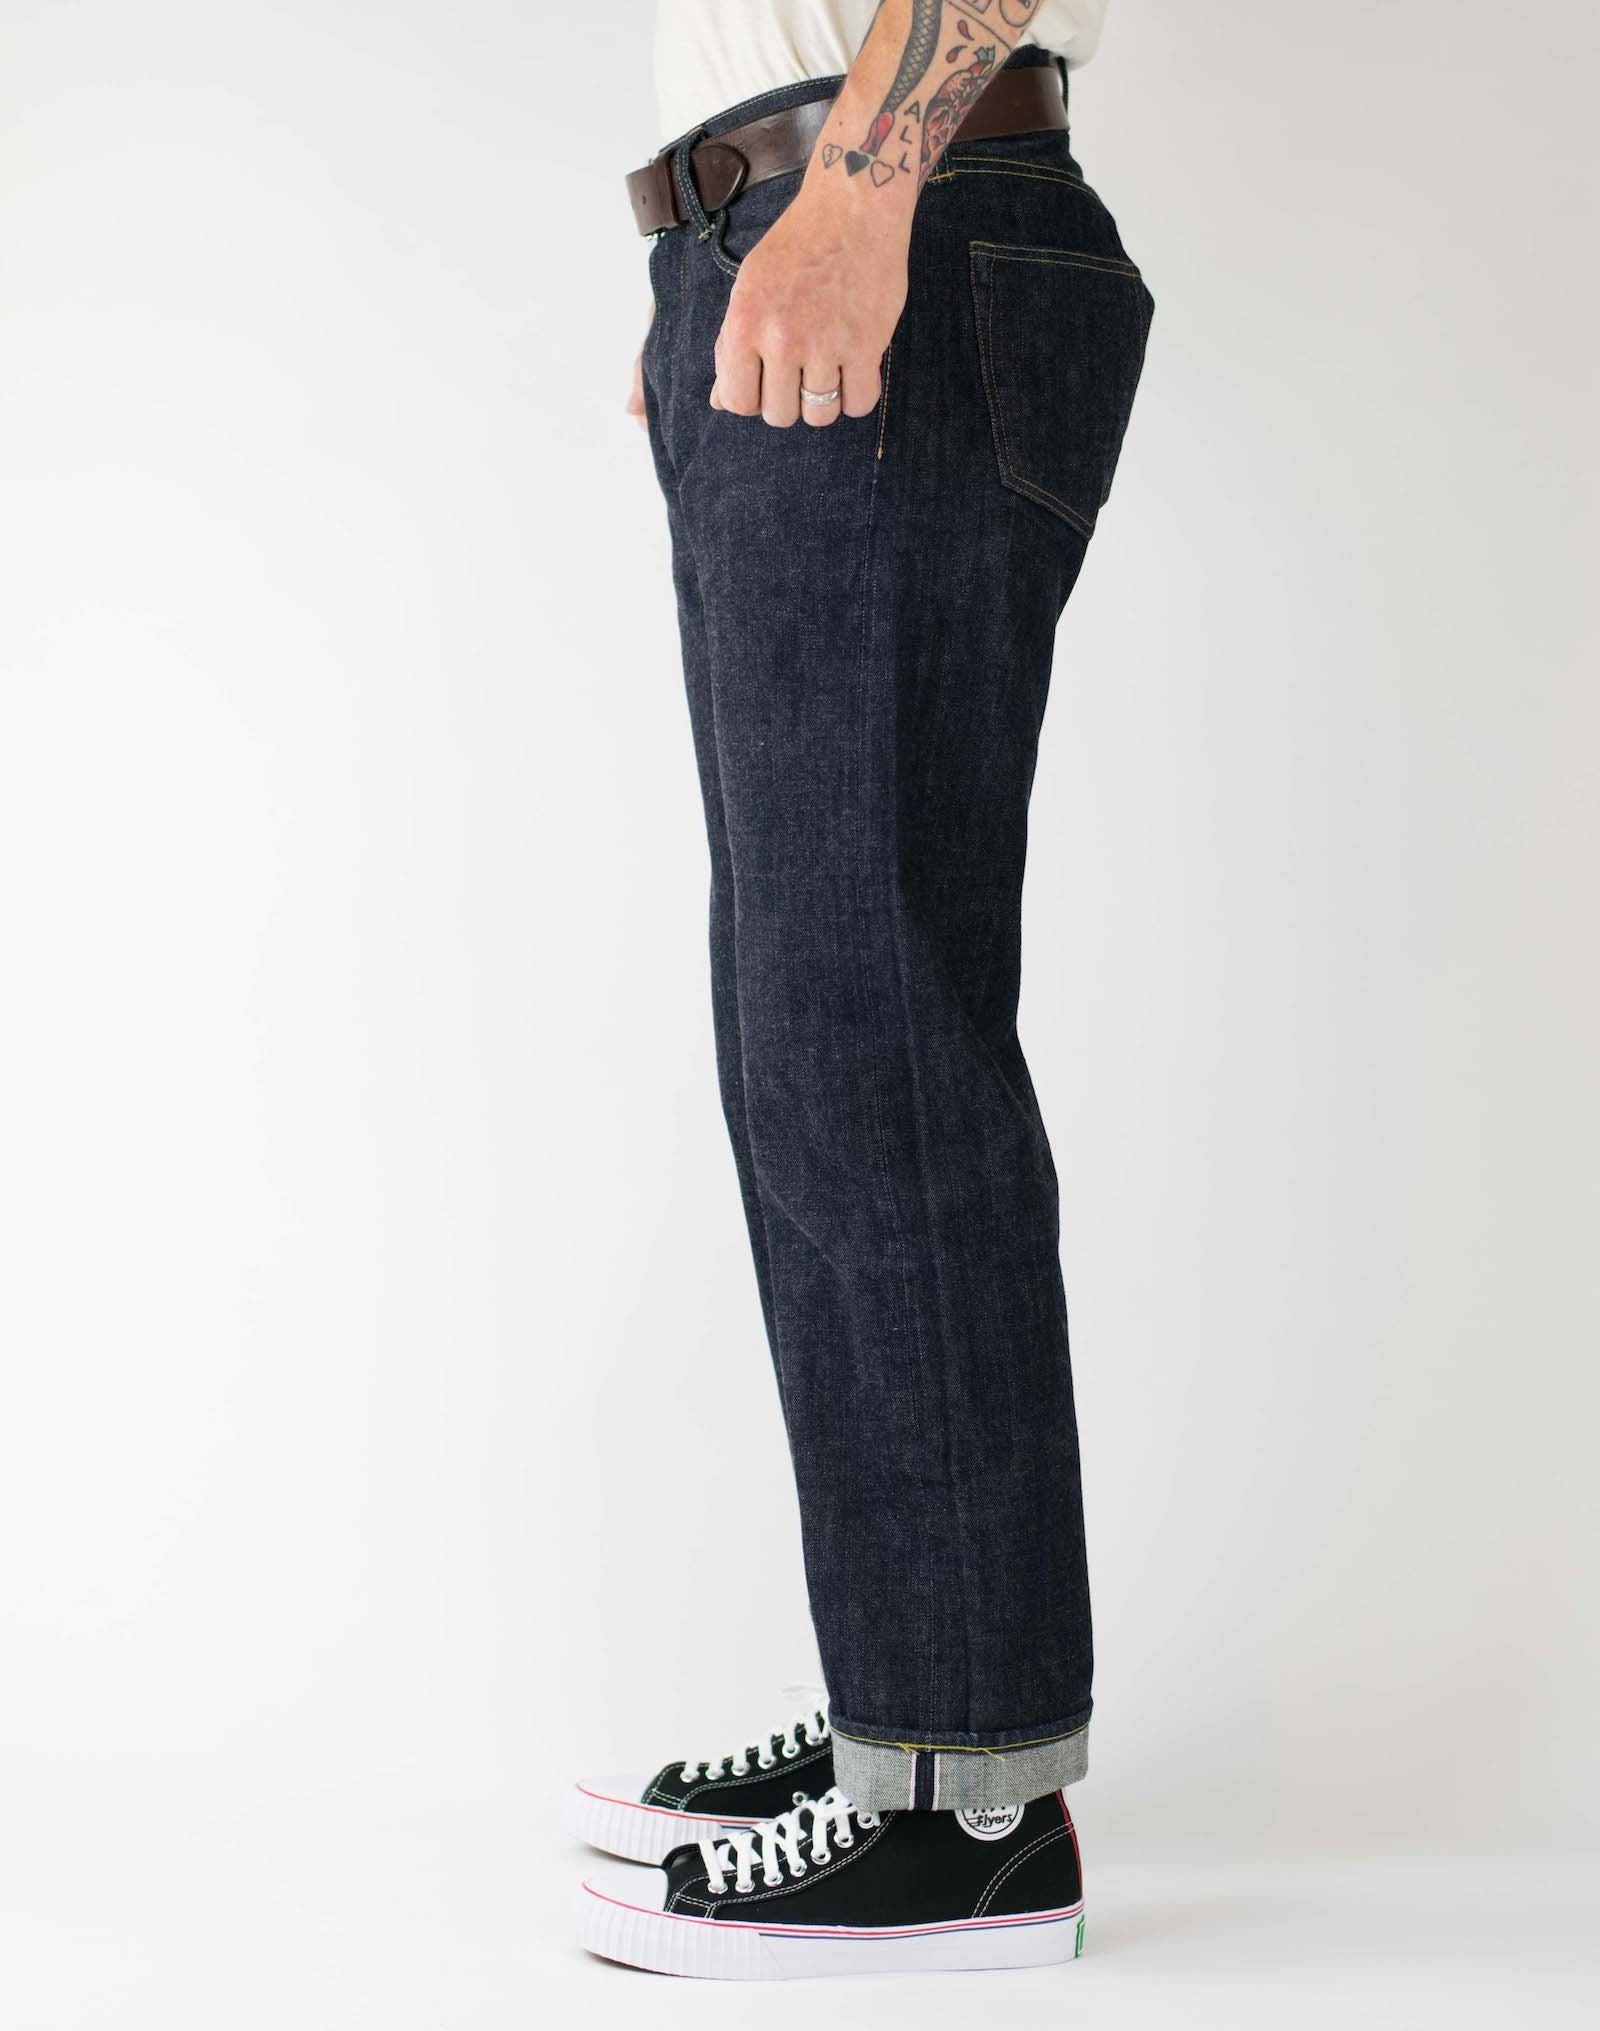 sugar cane jeans 1947